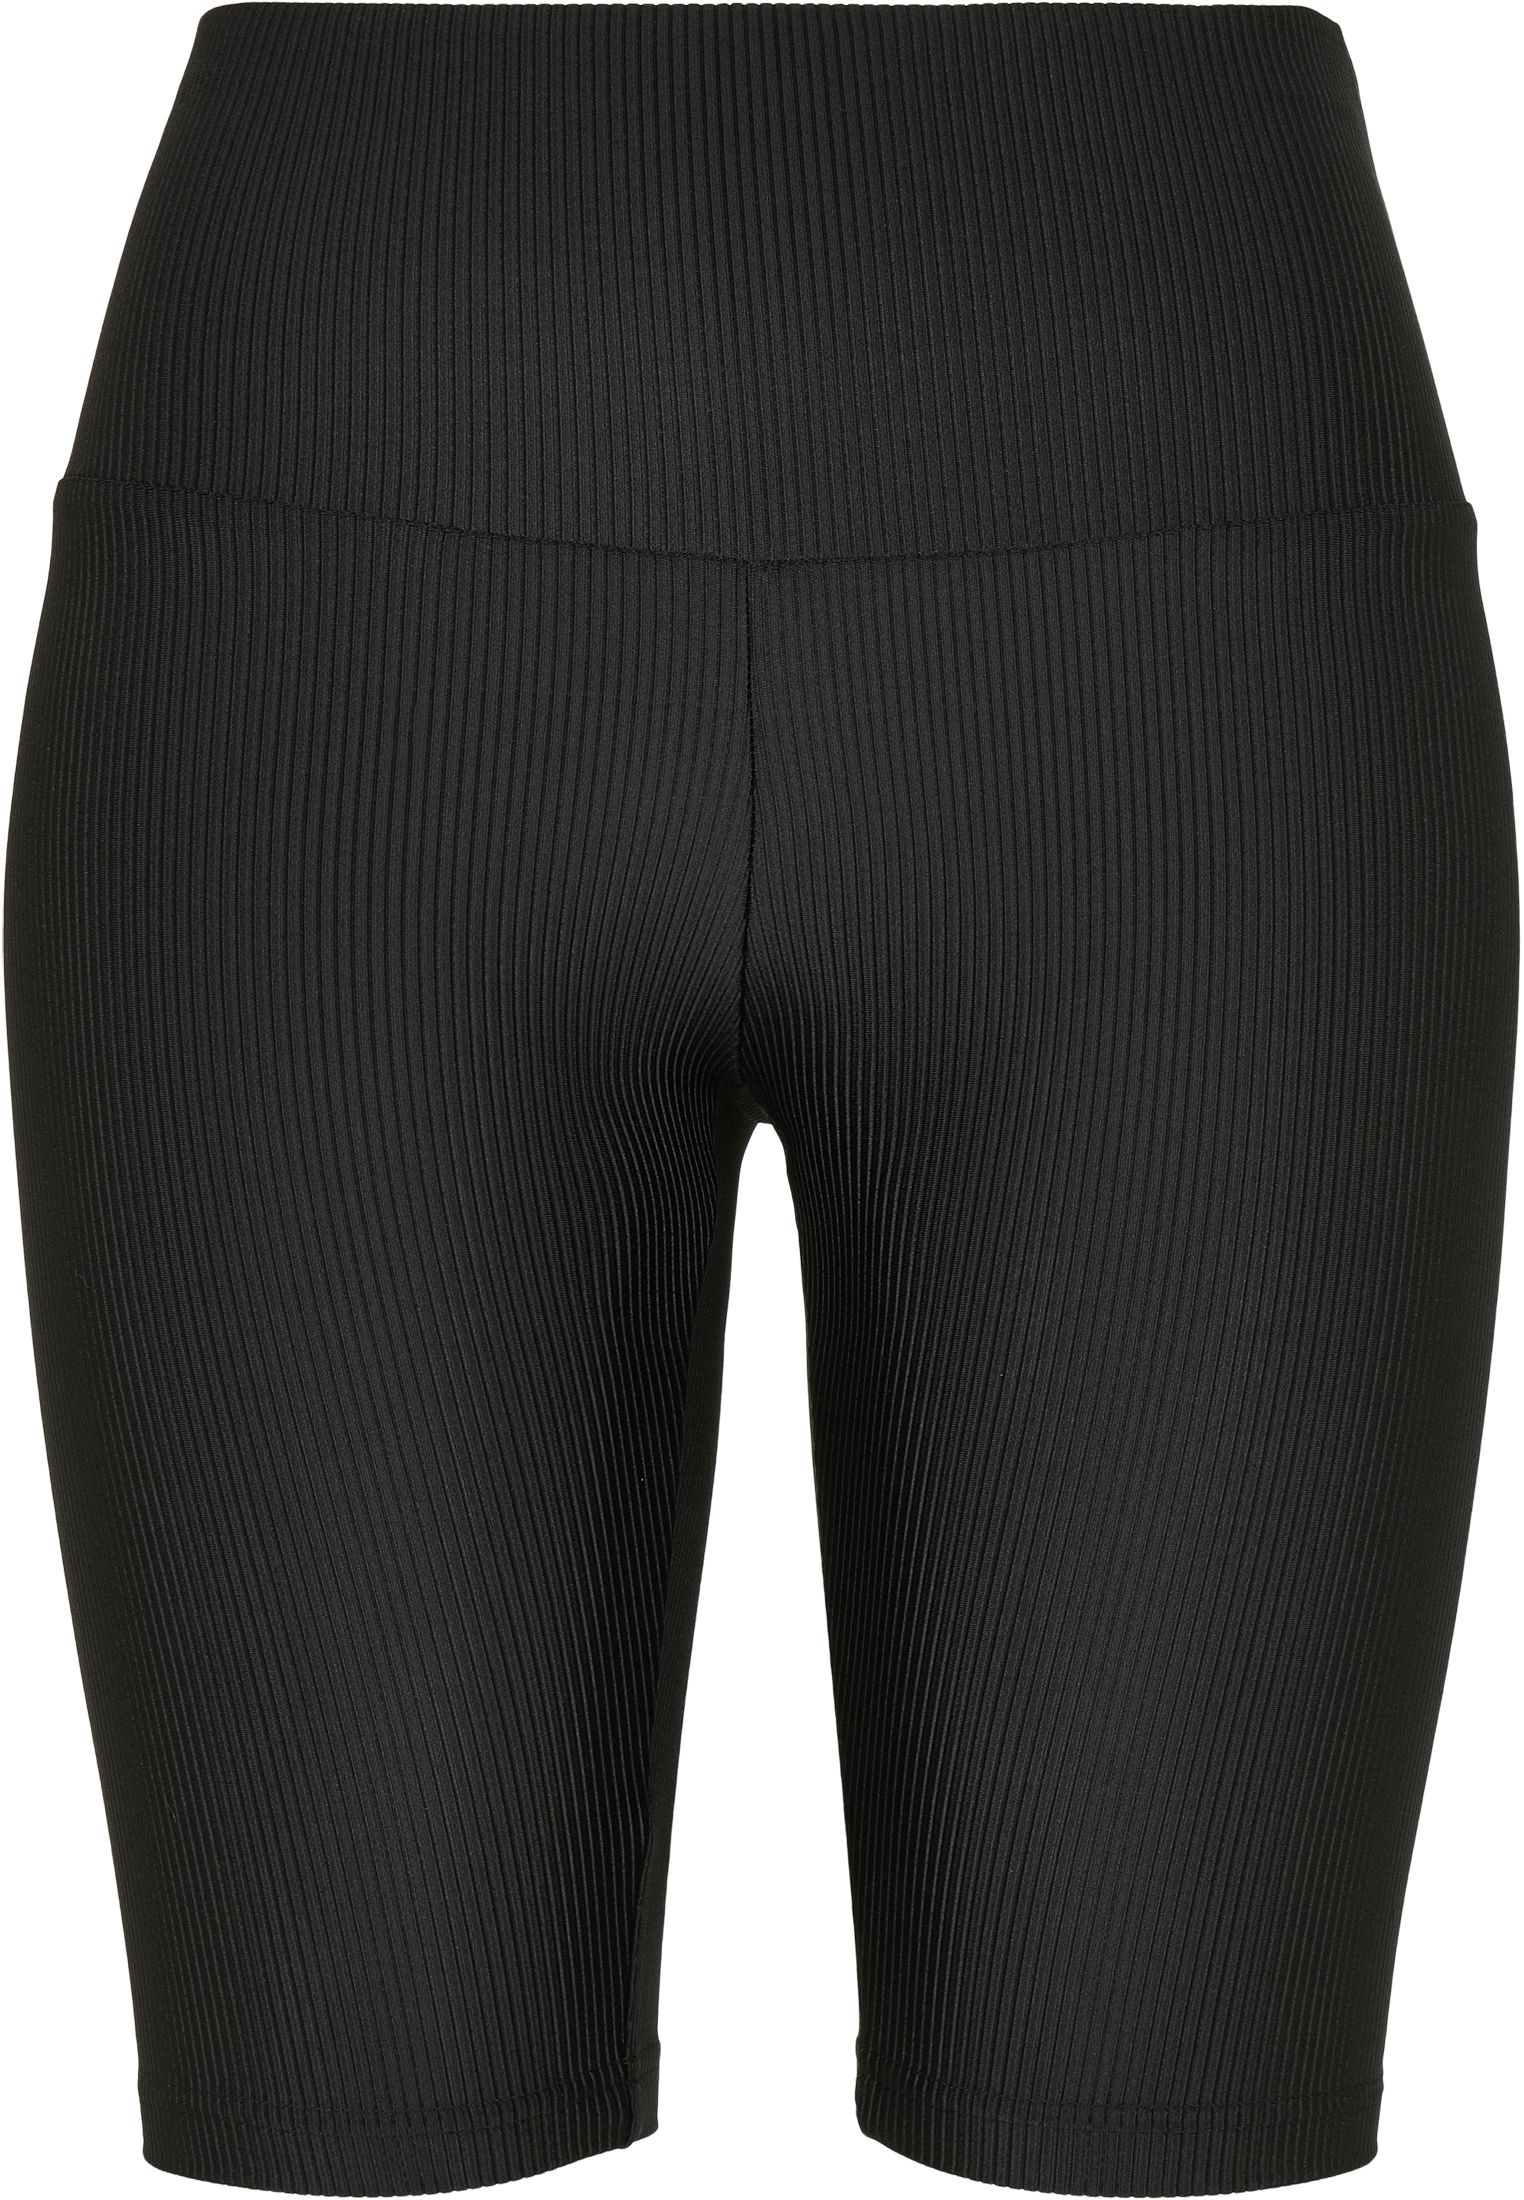  Ladies High Waist Shiny Rib Cycle Shorts in Farbe black